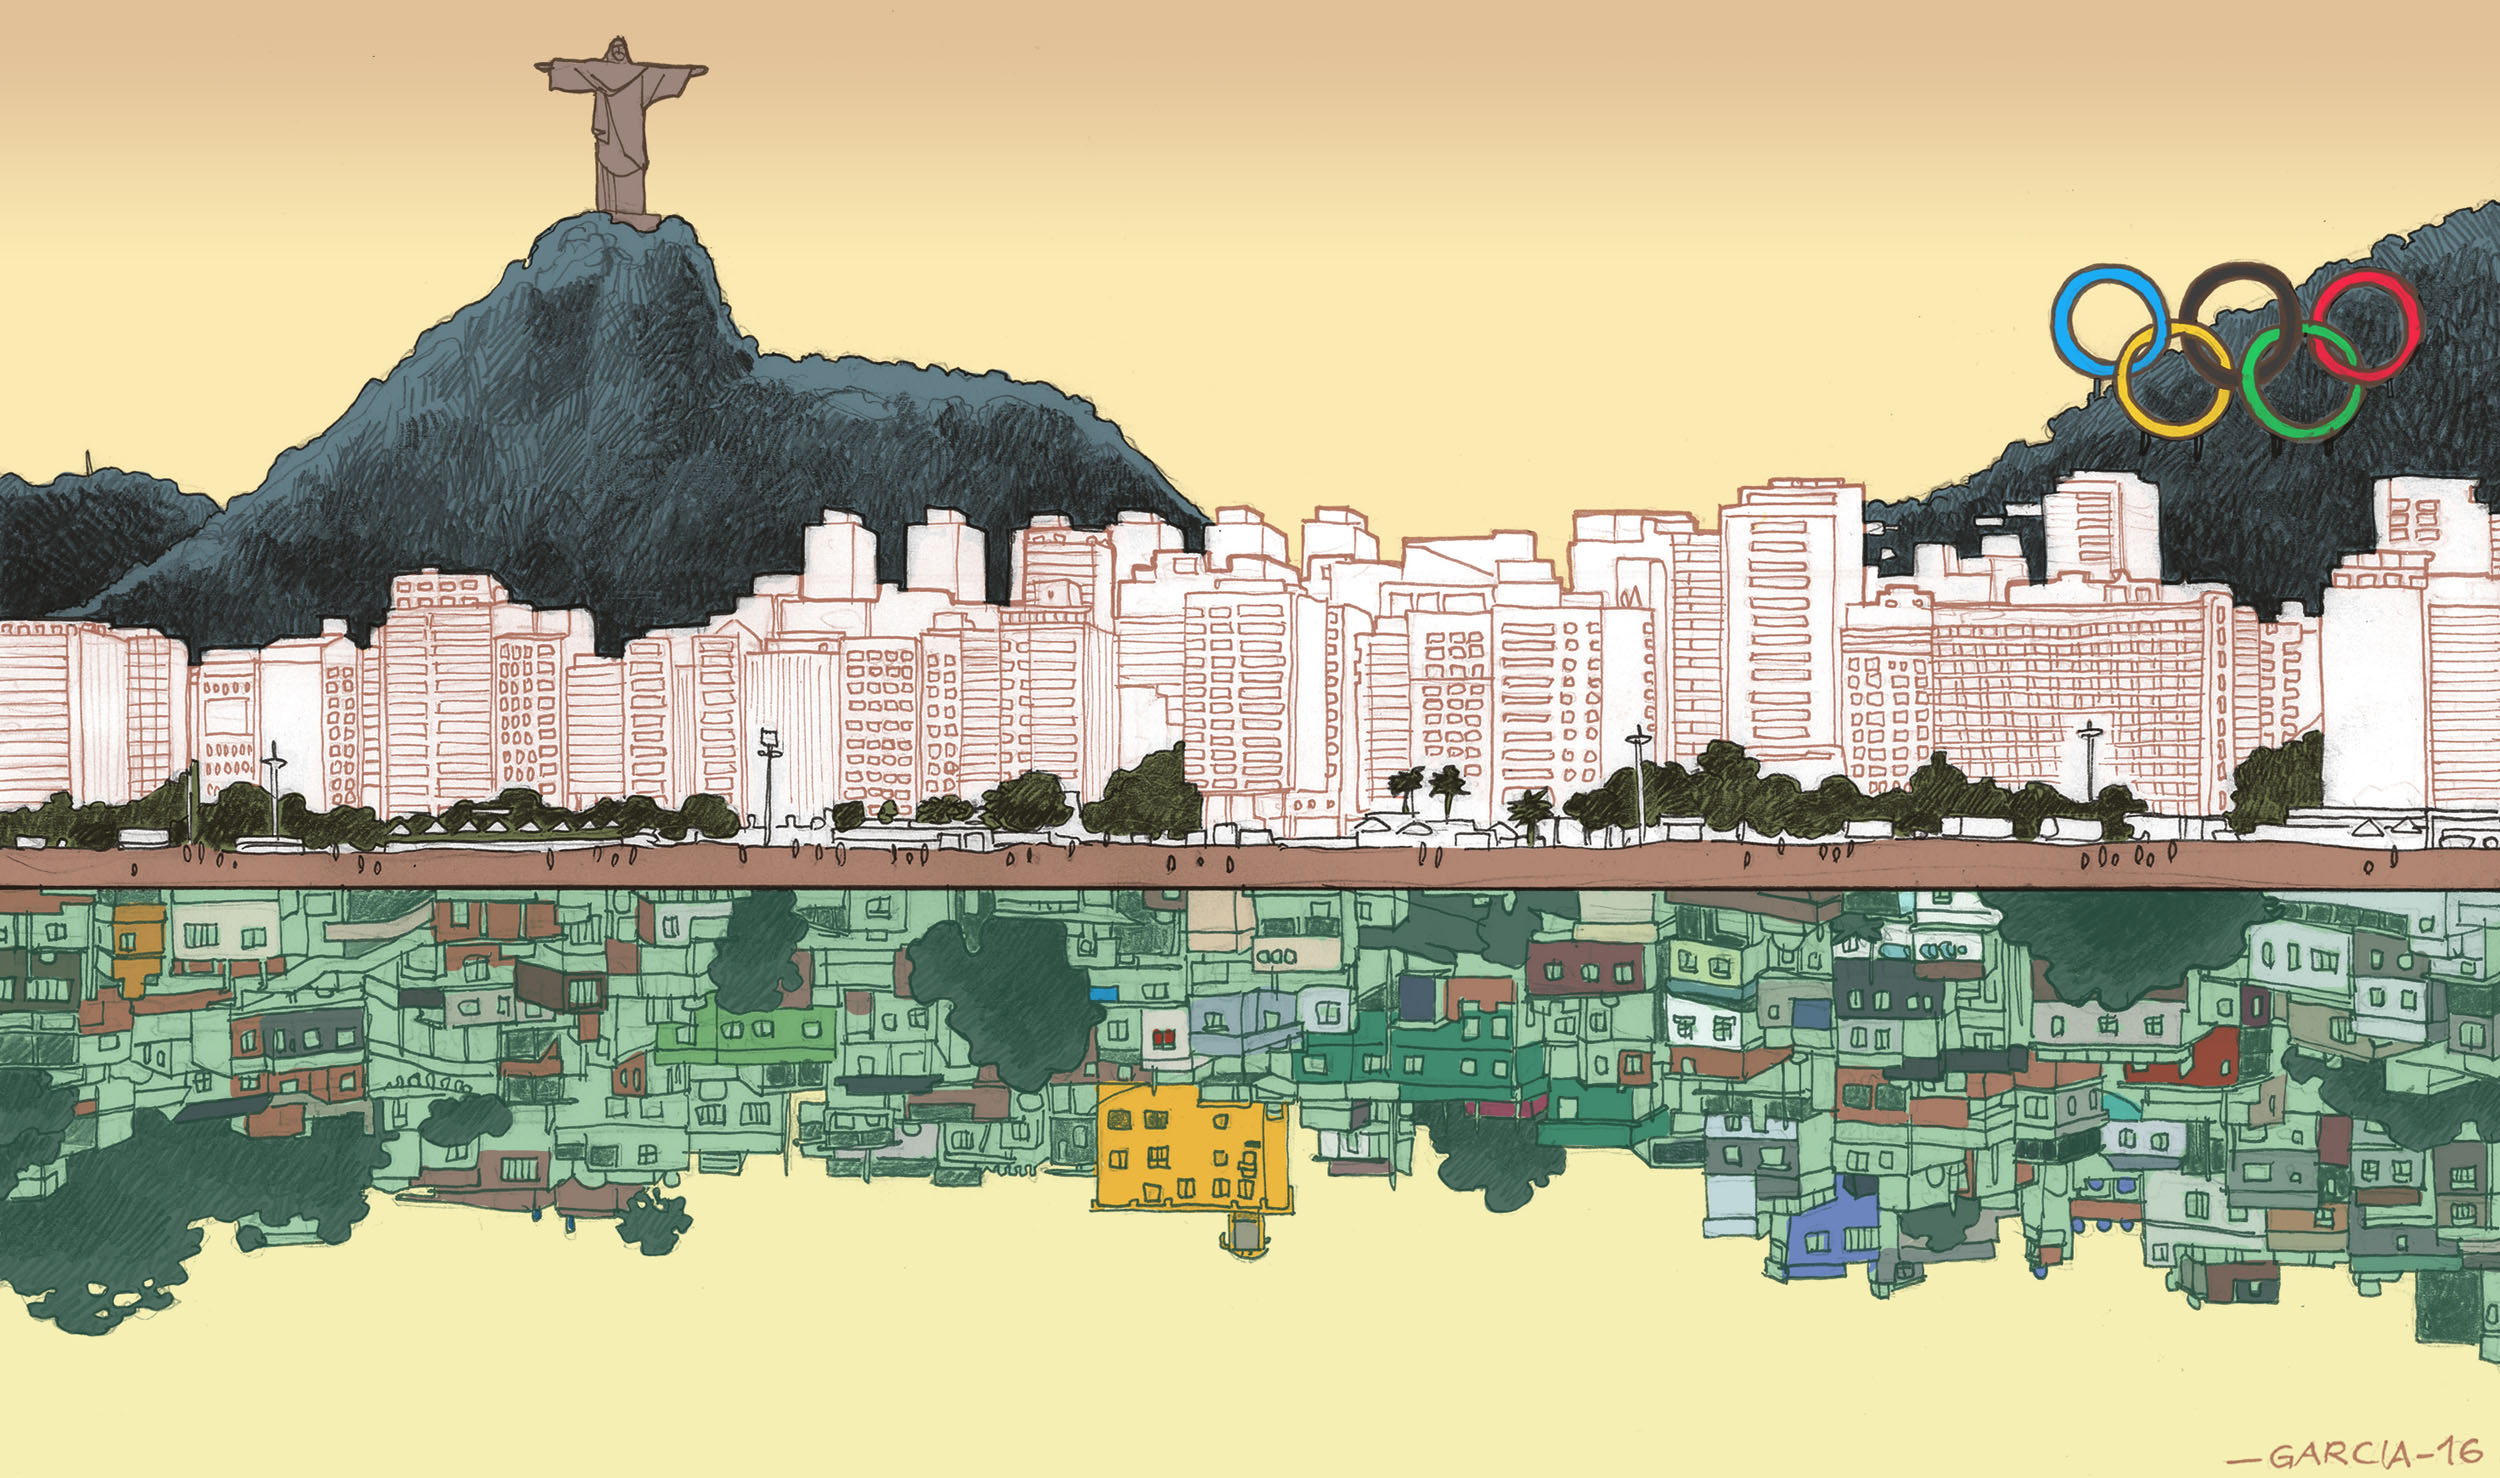 Daniel Garcia Art Illustration Accent Rio 2016 Olympics Brazil Weath Inequality Corruption Favelas 01